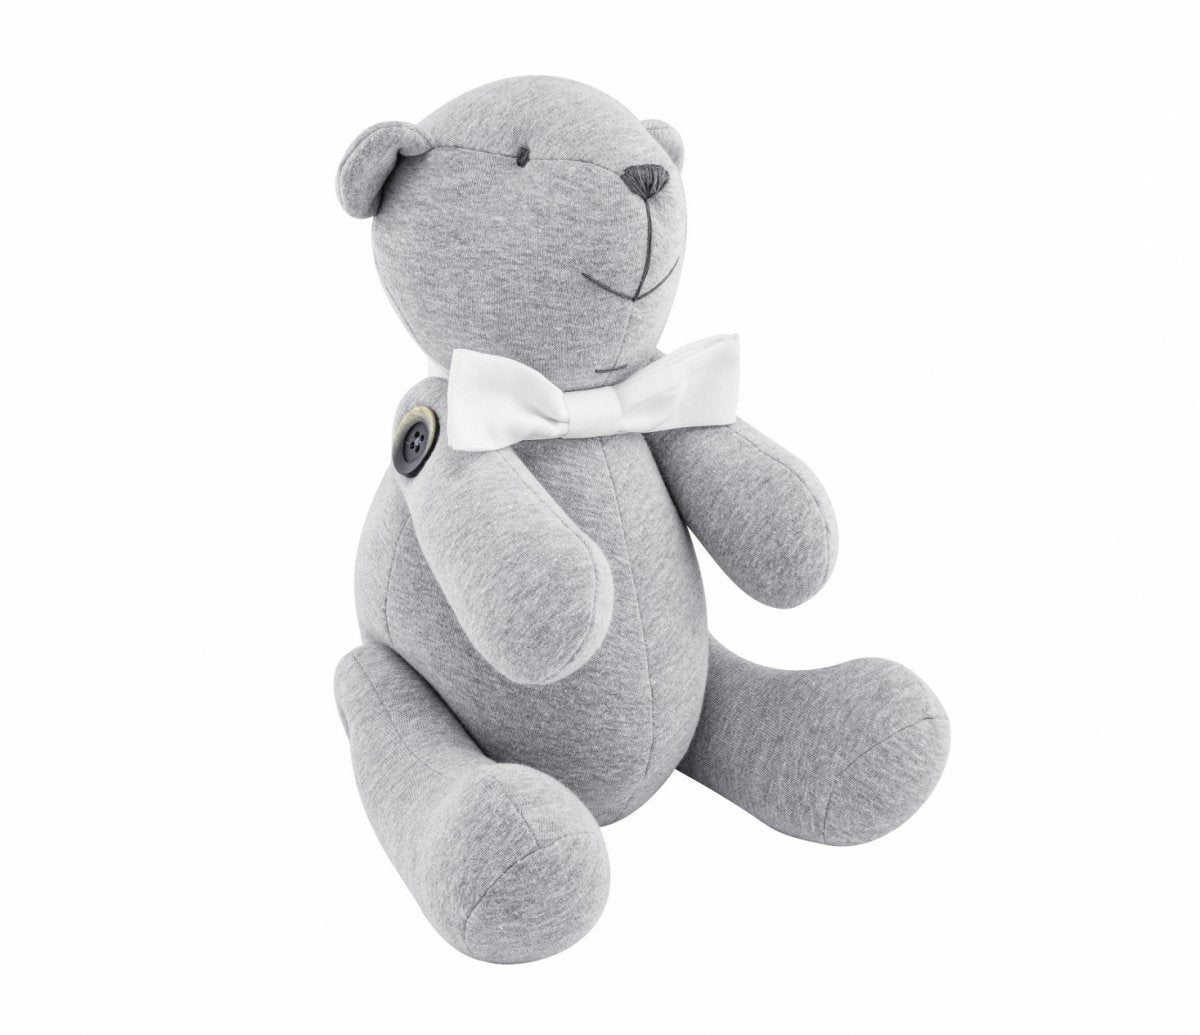 Decorative Teddy Bear Grey with White Bow